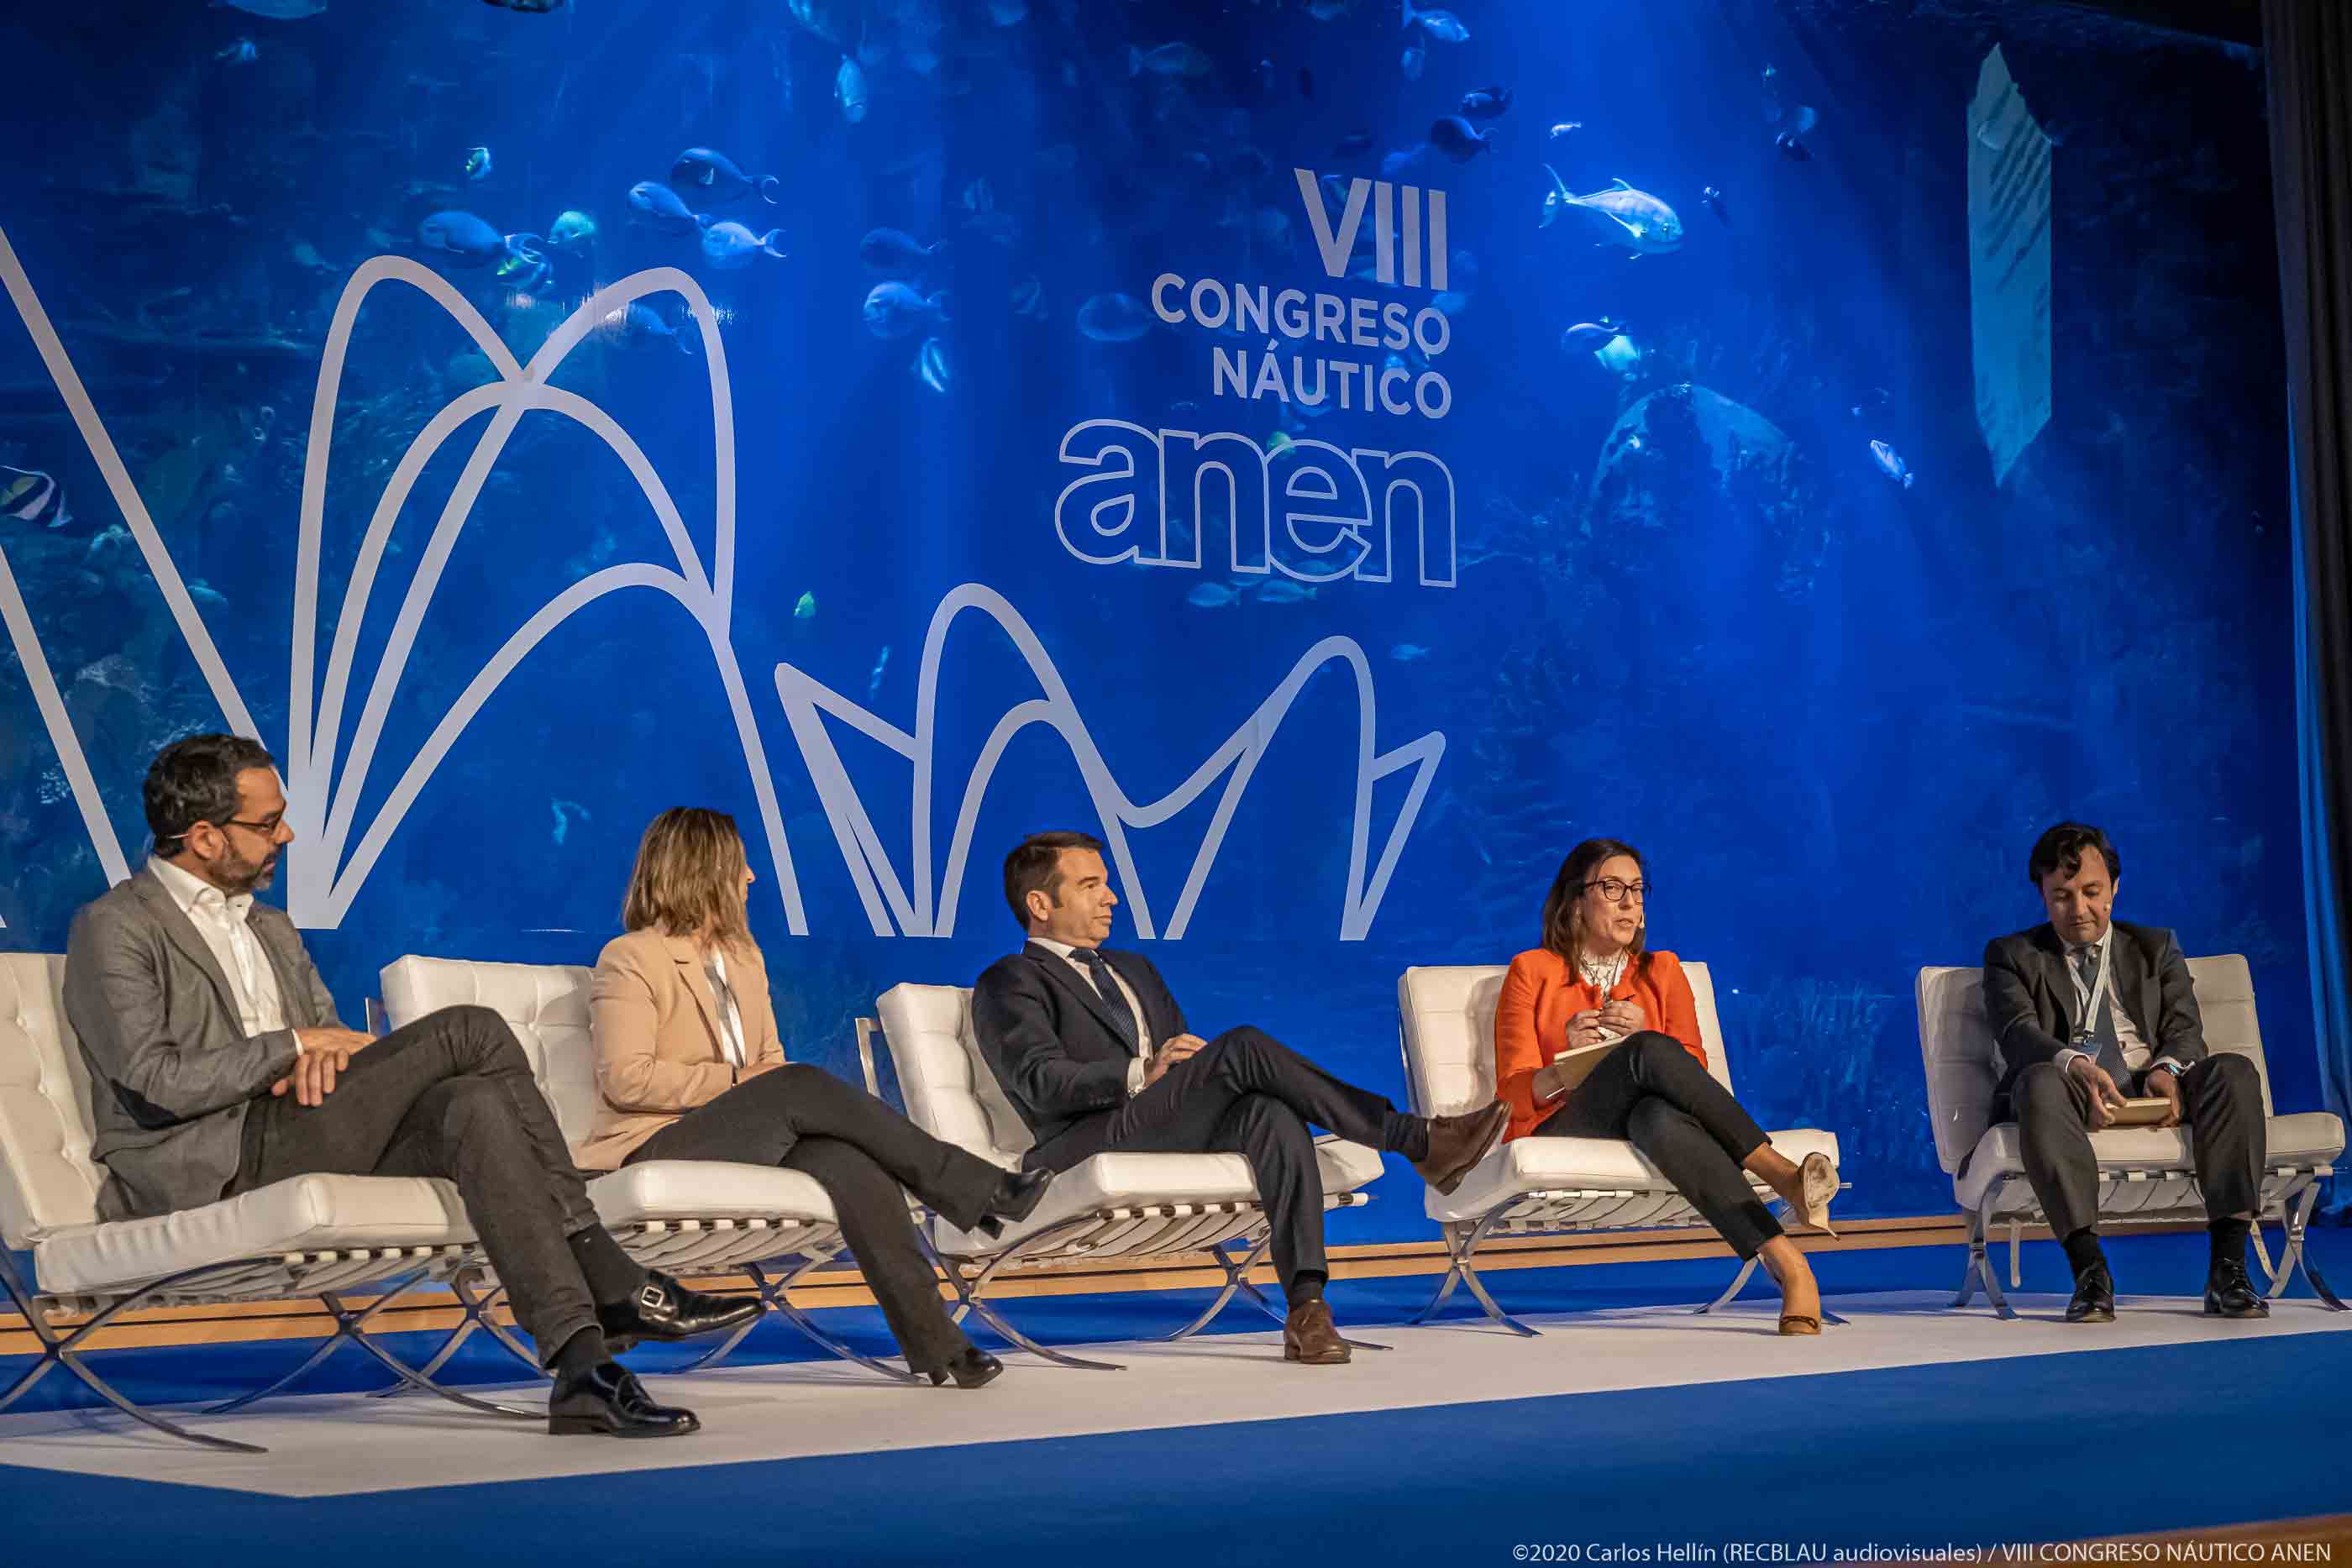 Congreso Náutico, ANEN, agenda náutica, industria náutica, sector náutico, Valencia